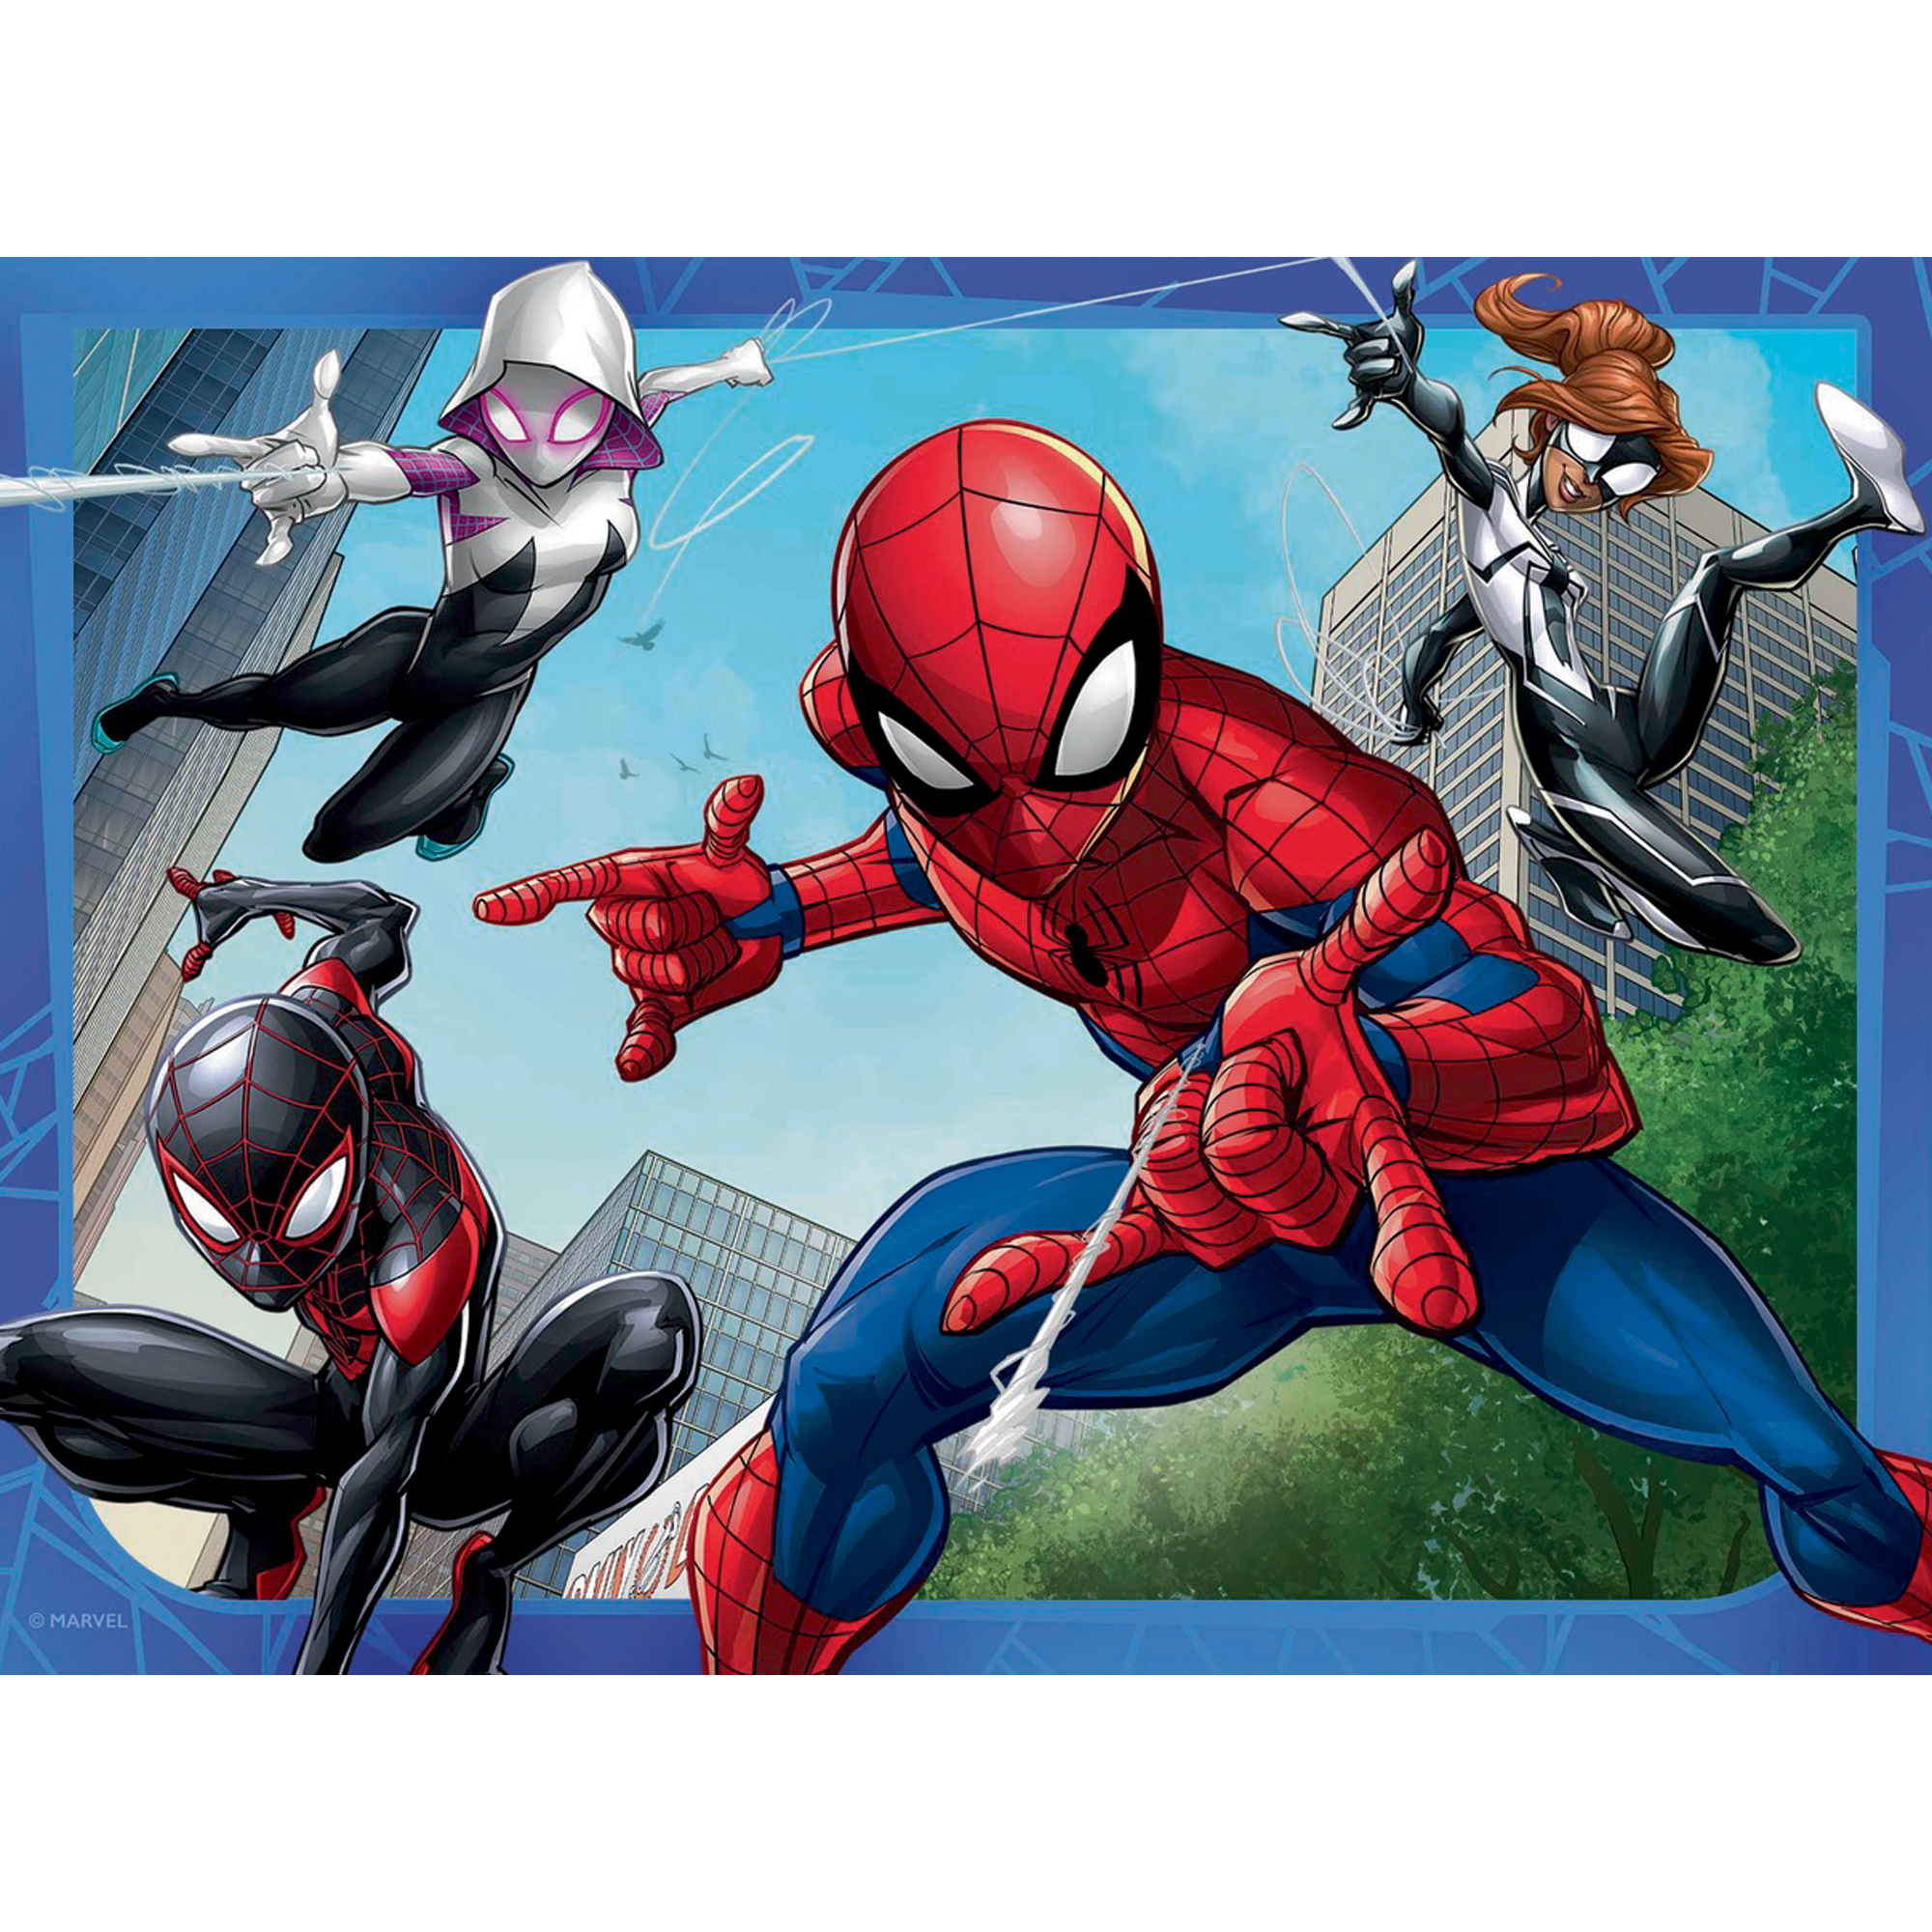 Ravensburger puzzle 4 in 1 Spiderman - Ravensburger